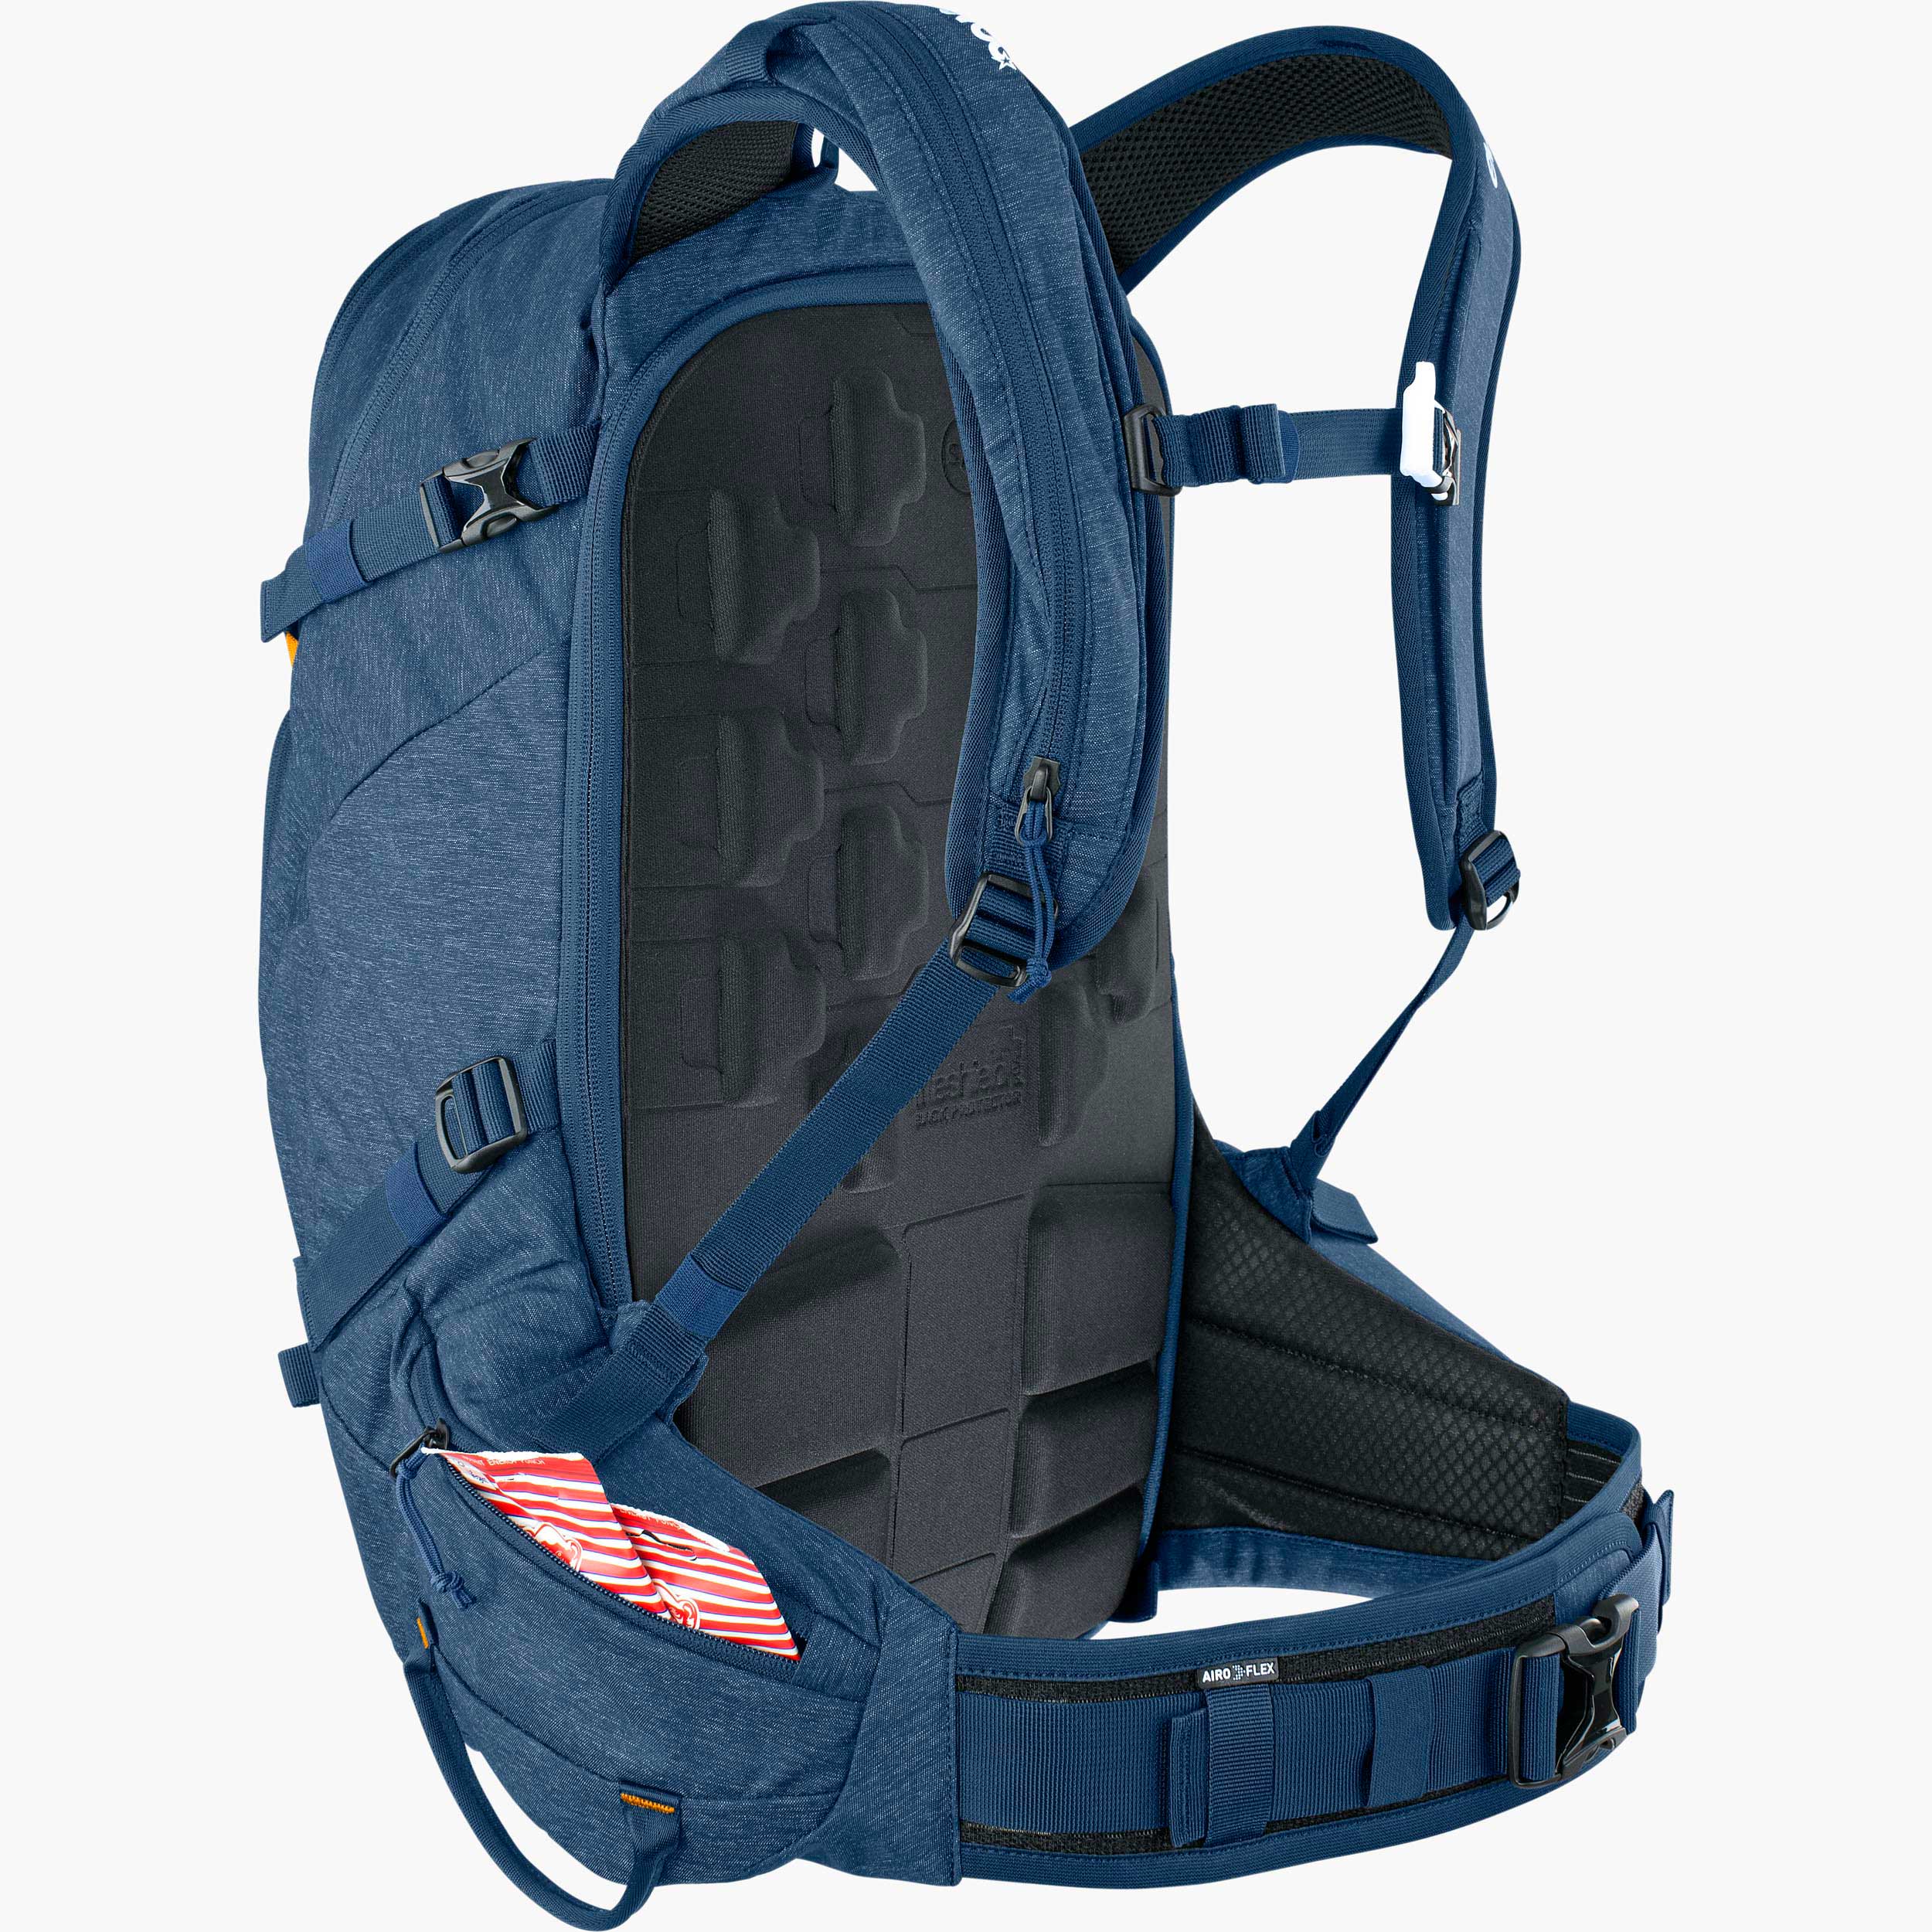 Protector Ski Backpack skirucksack Back Protector Snowboard Protector Culture 